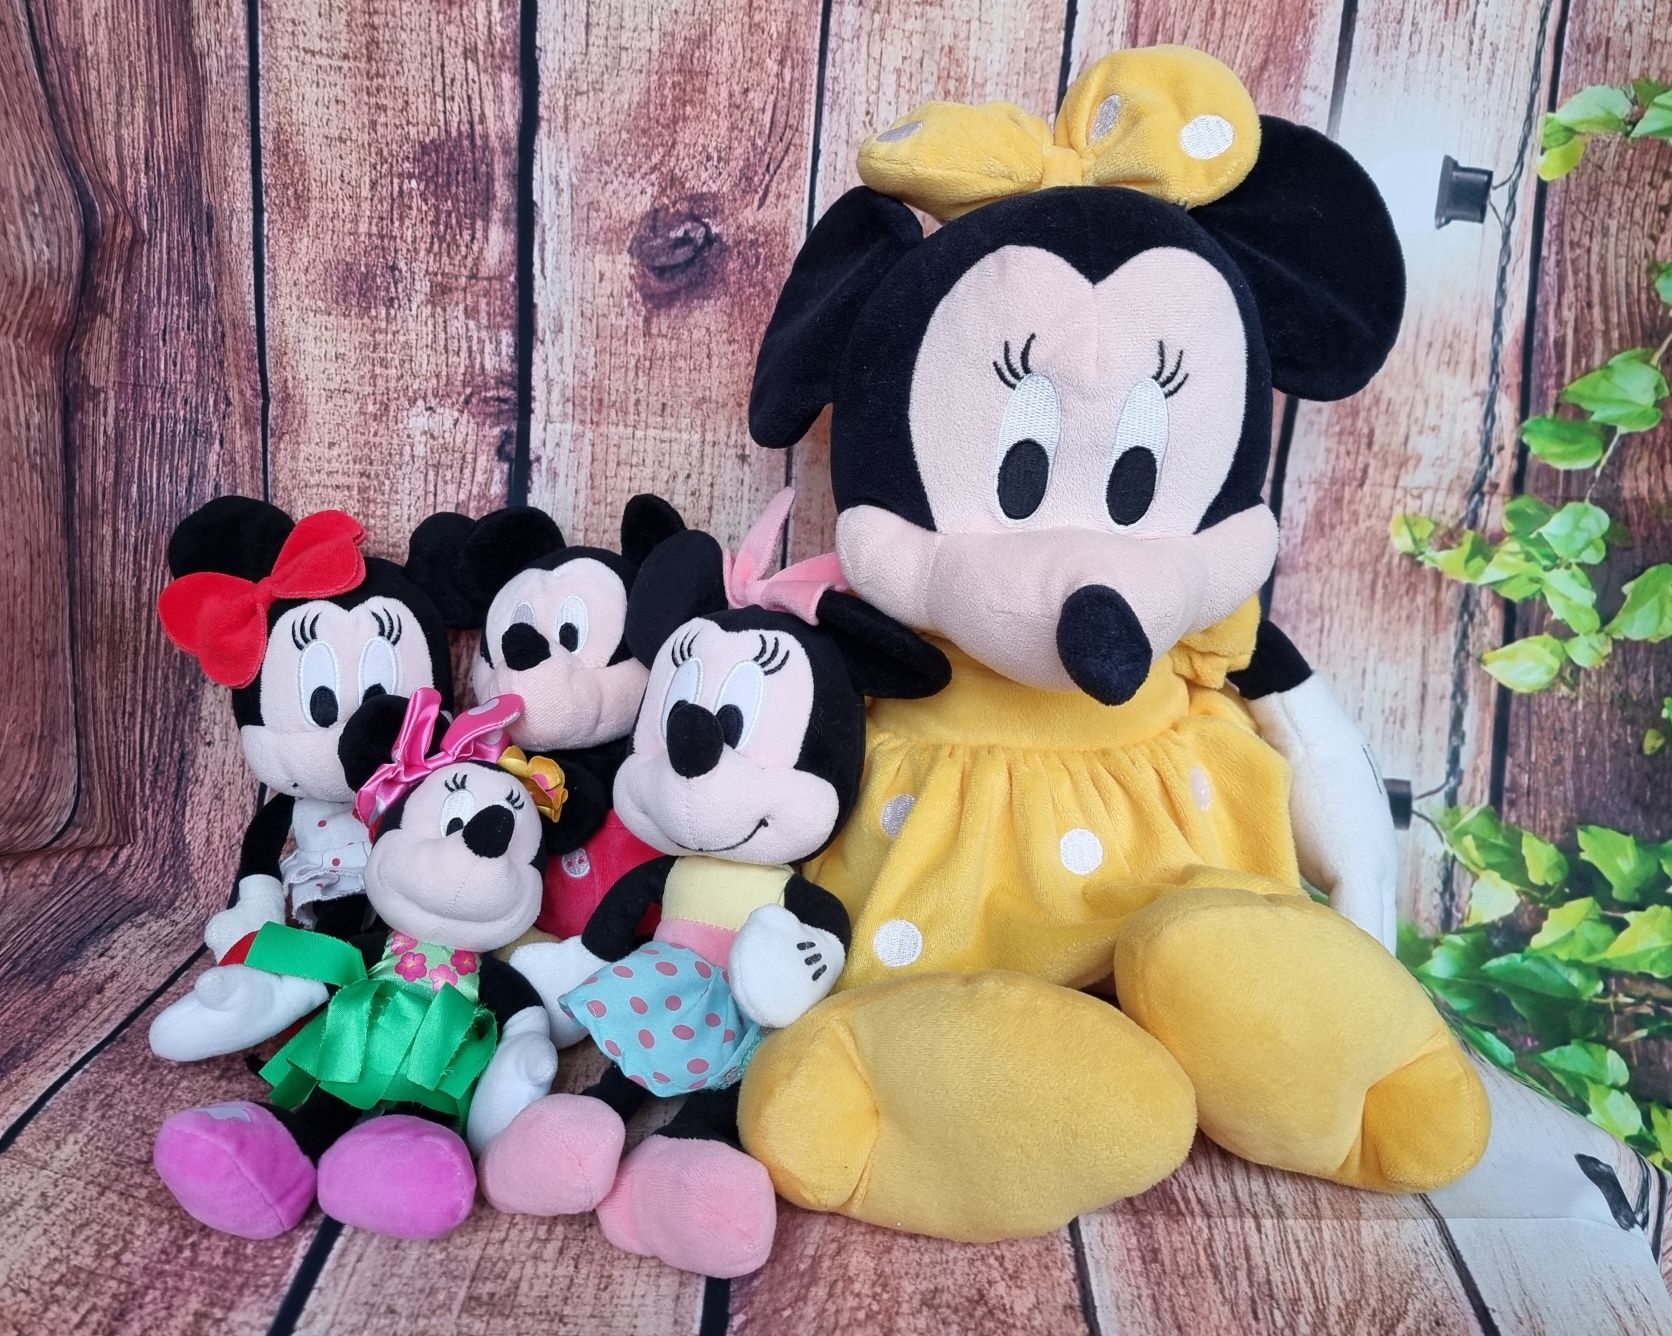 Lot plușuri Minnie & Mickey Mouse